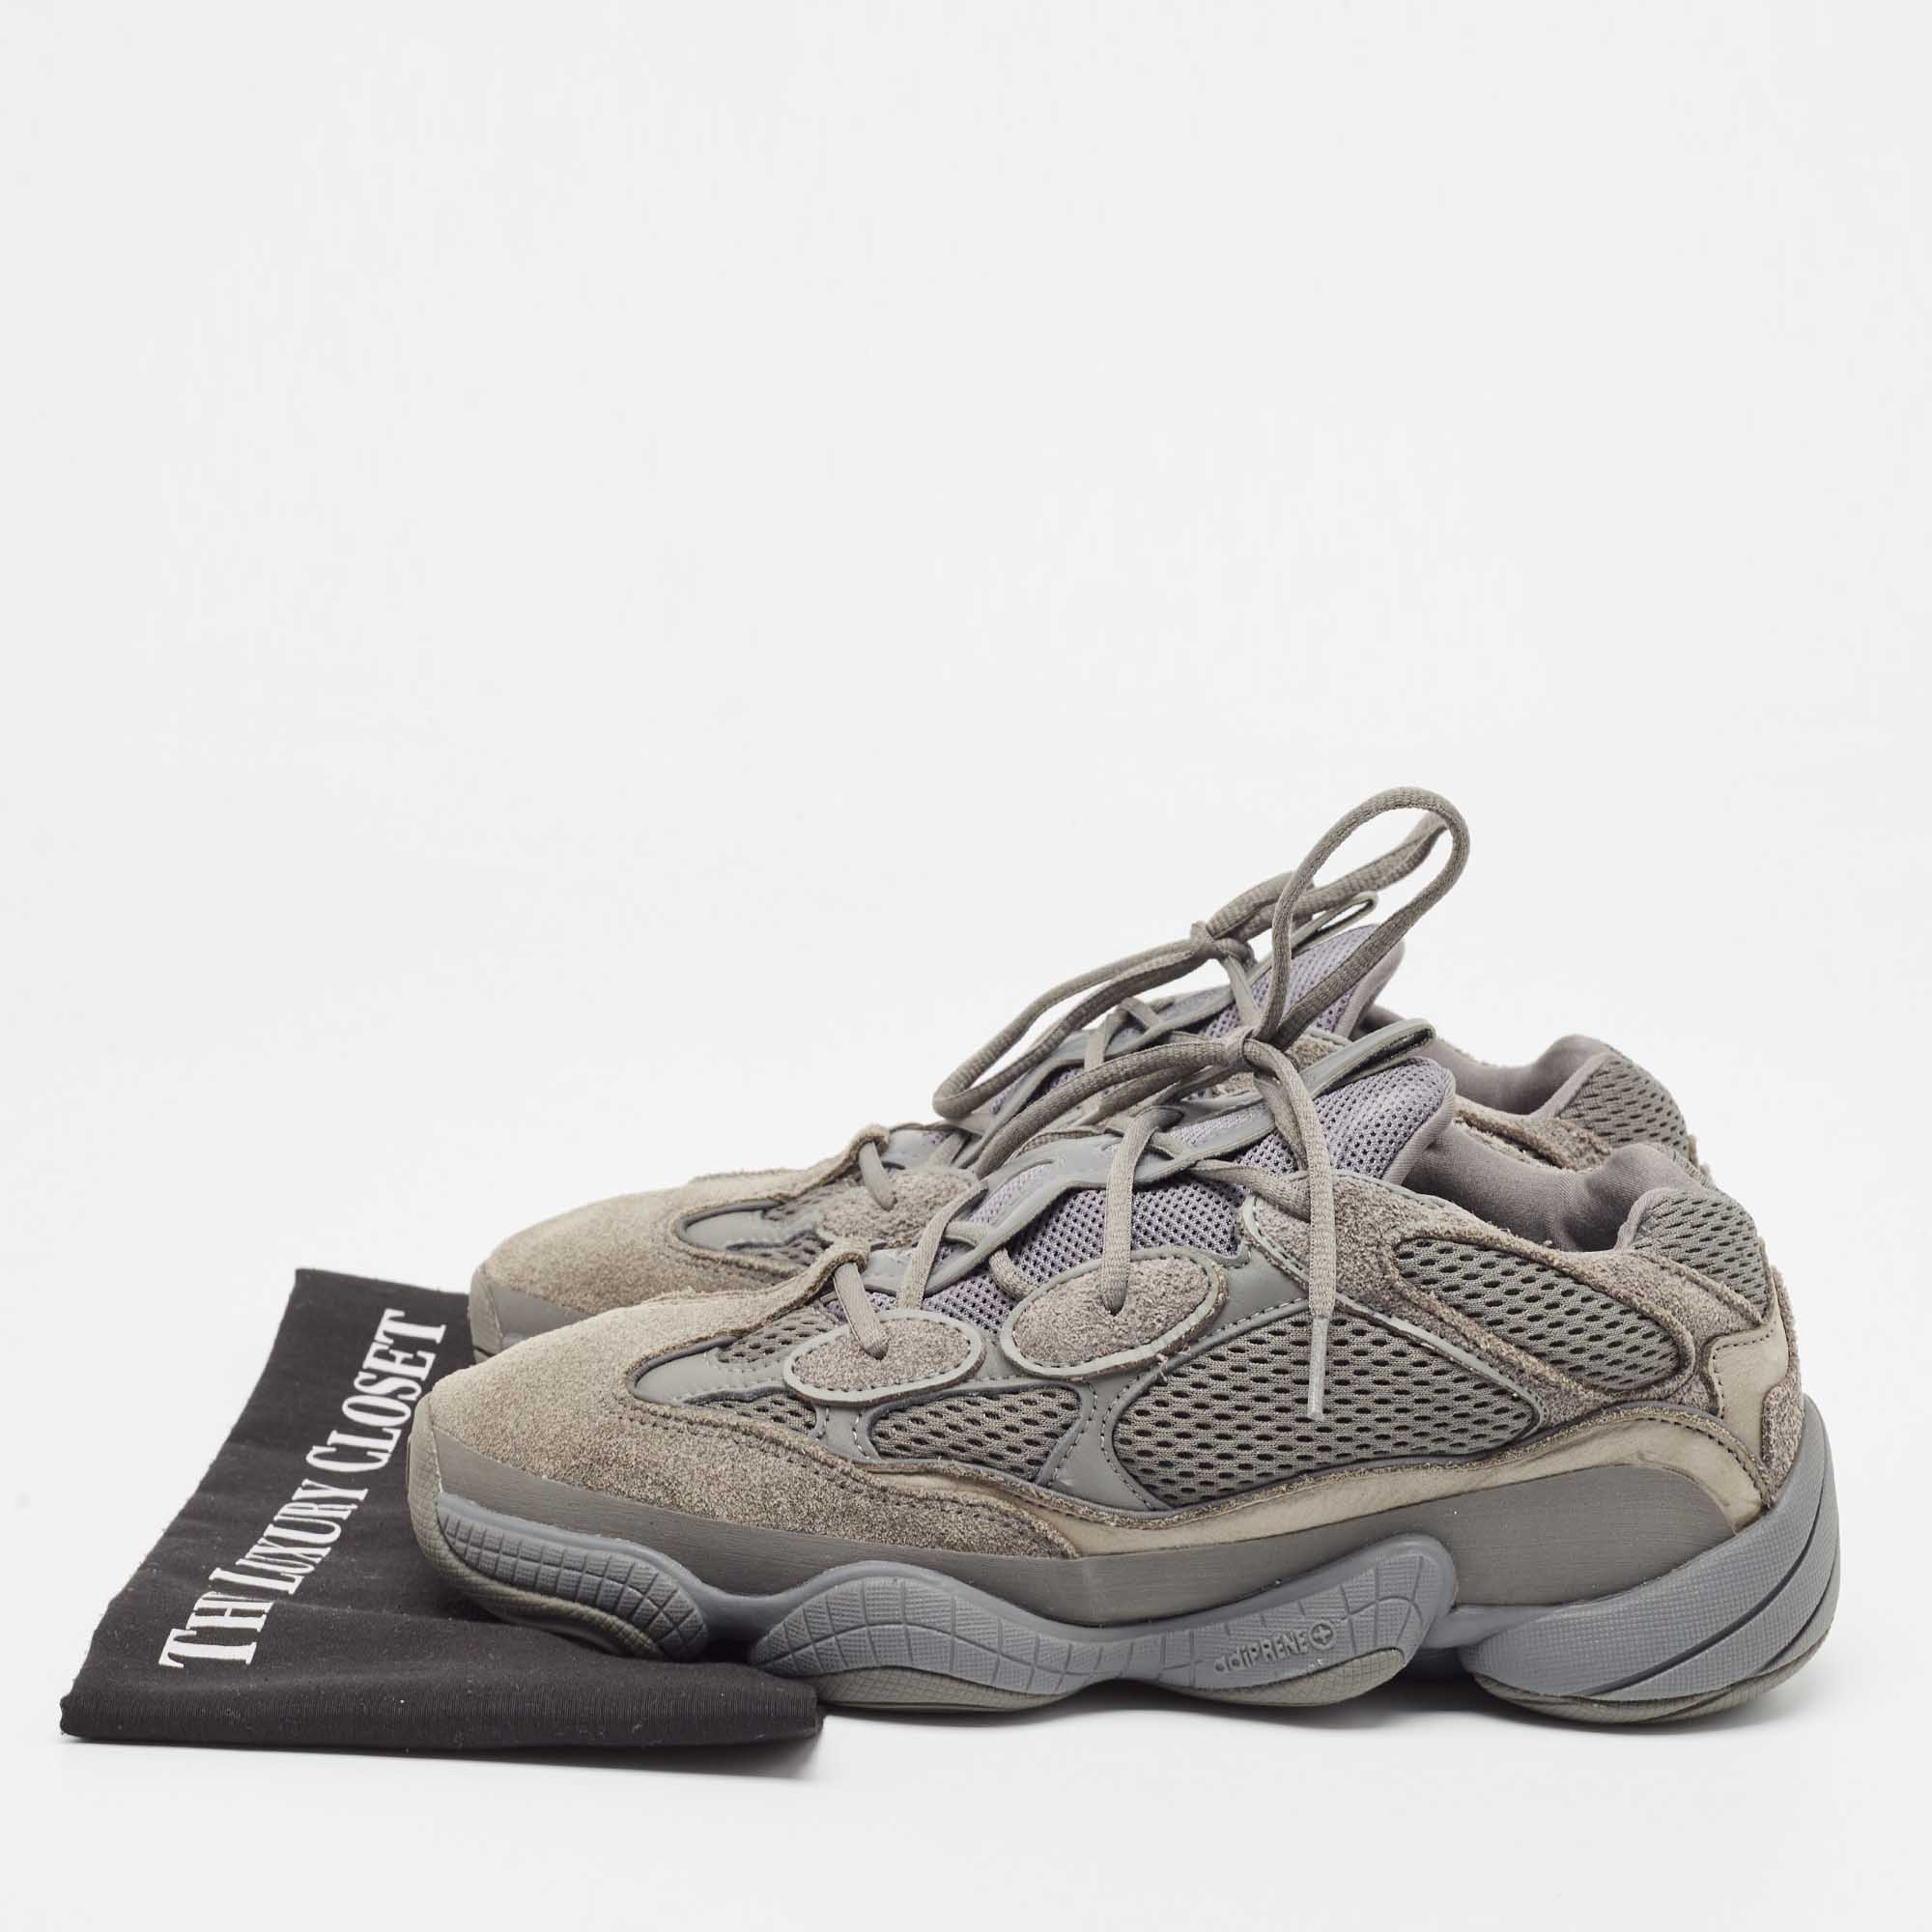 Yeezy X Adidas Grey Suede And Leather Yeezy-500 Utility- Grey Sneakers Size 43 1/3